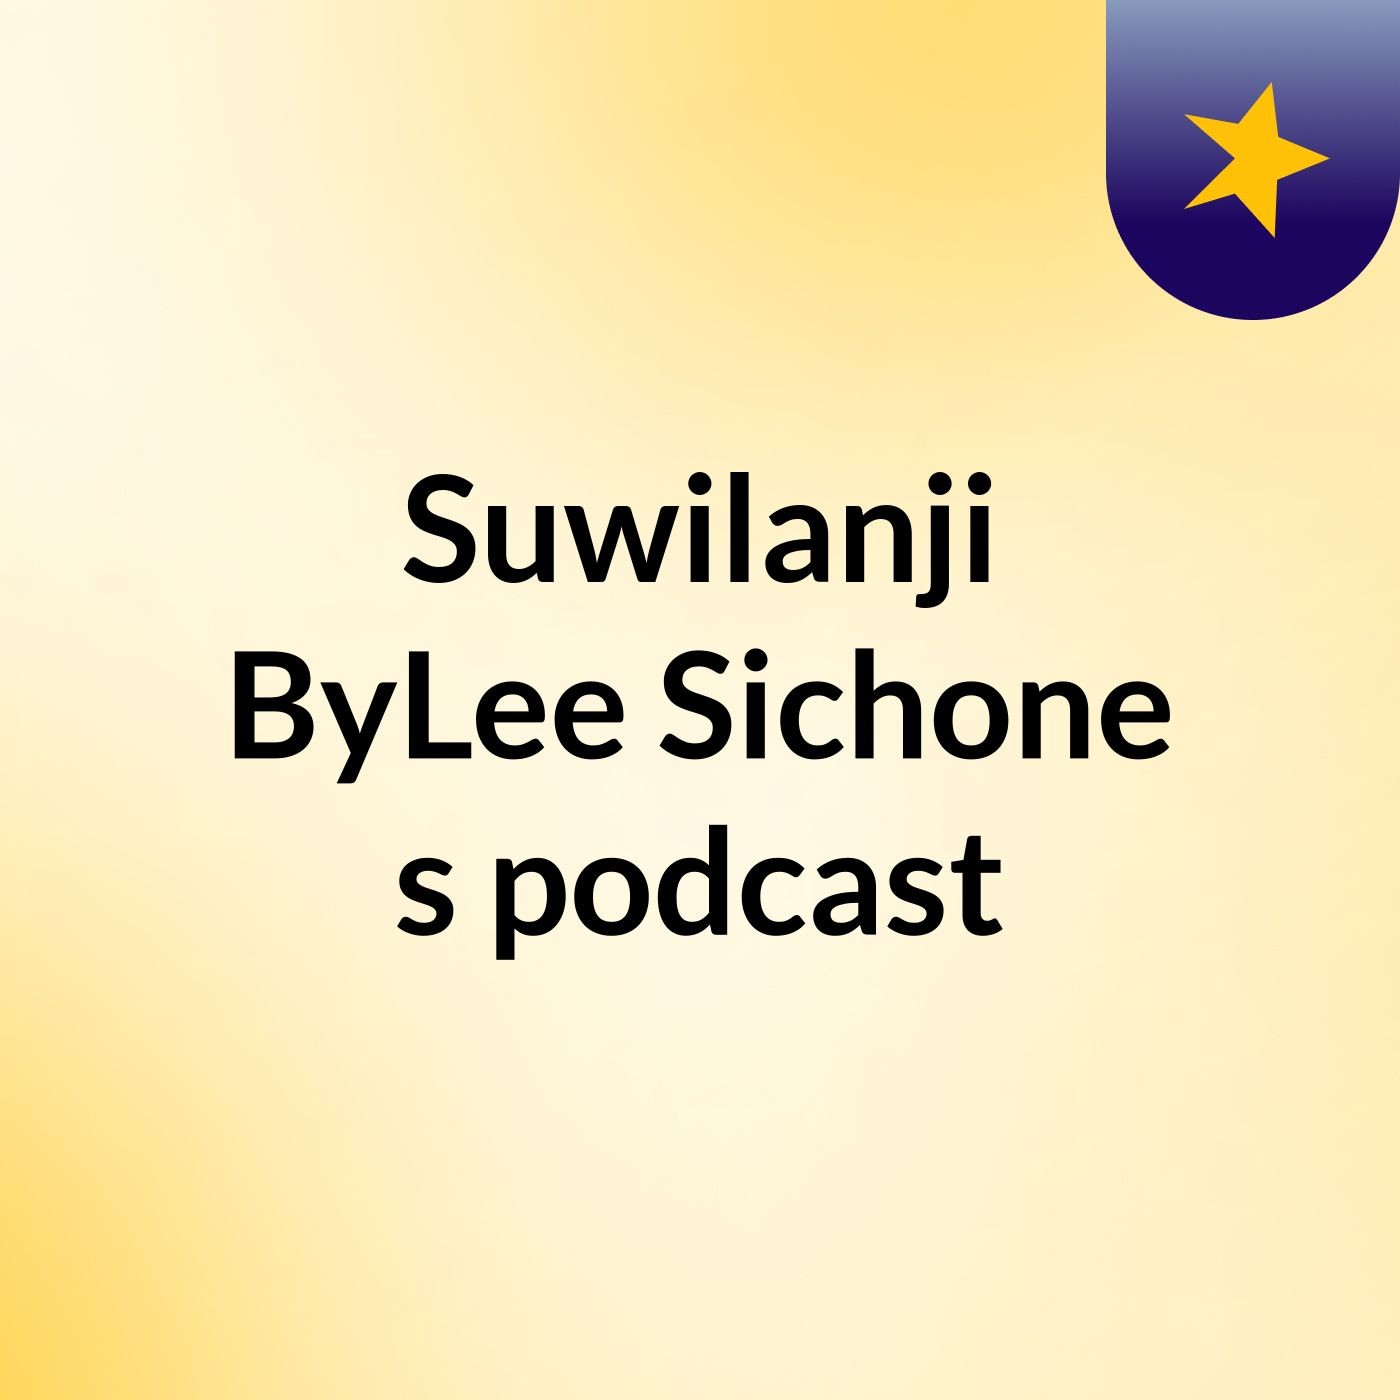 Suwilanji ByLee Sichone's podcast